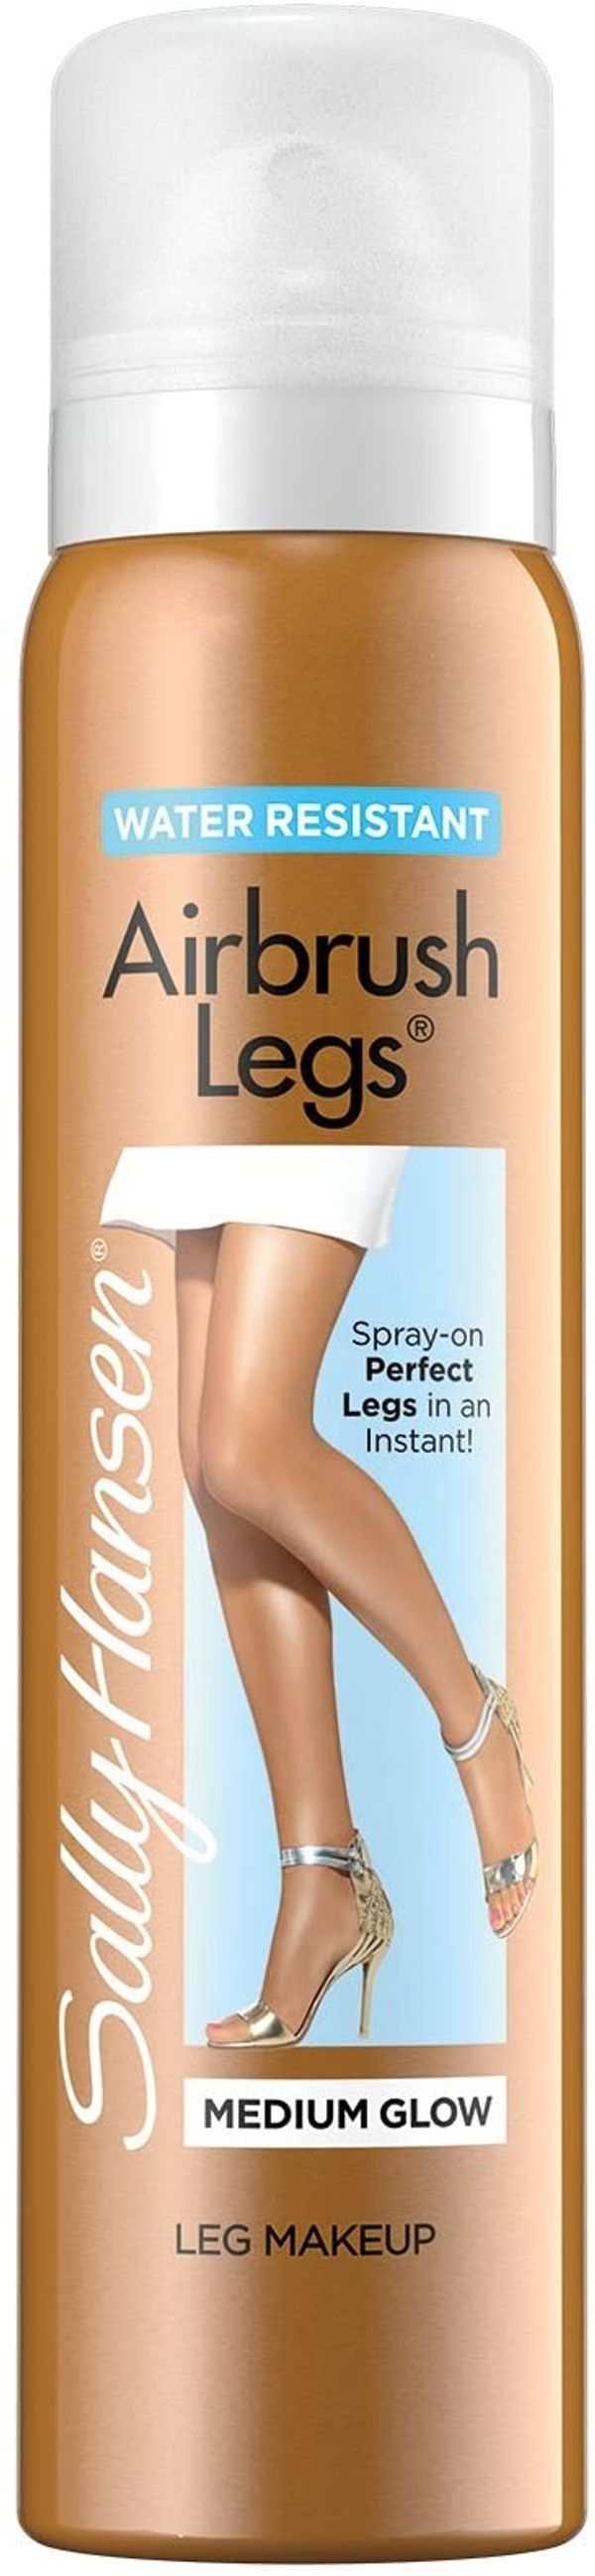 Sally Hansen Airbrush Legs Leg Makeup - Medium Glow